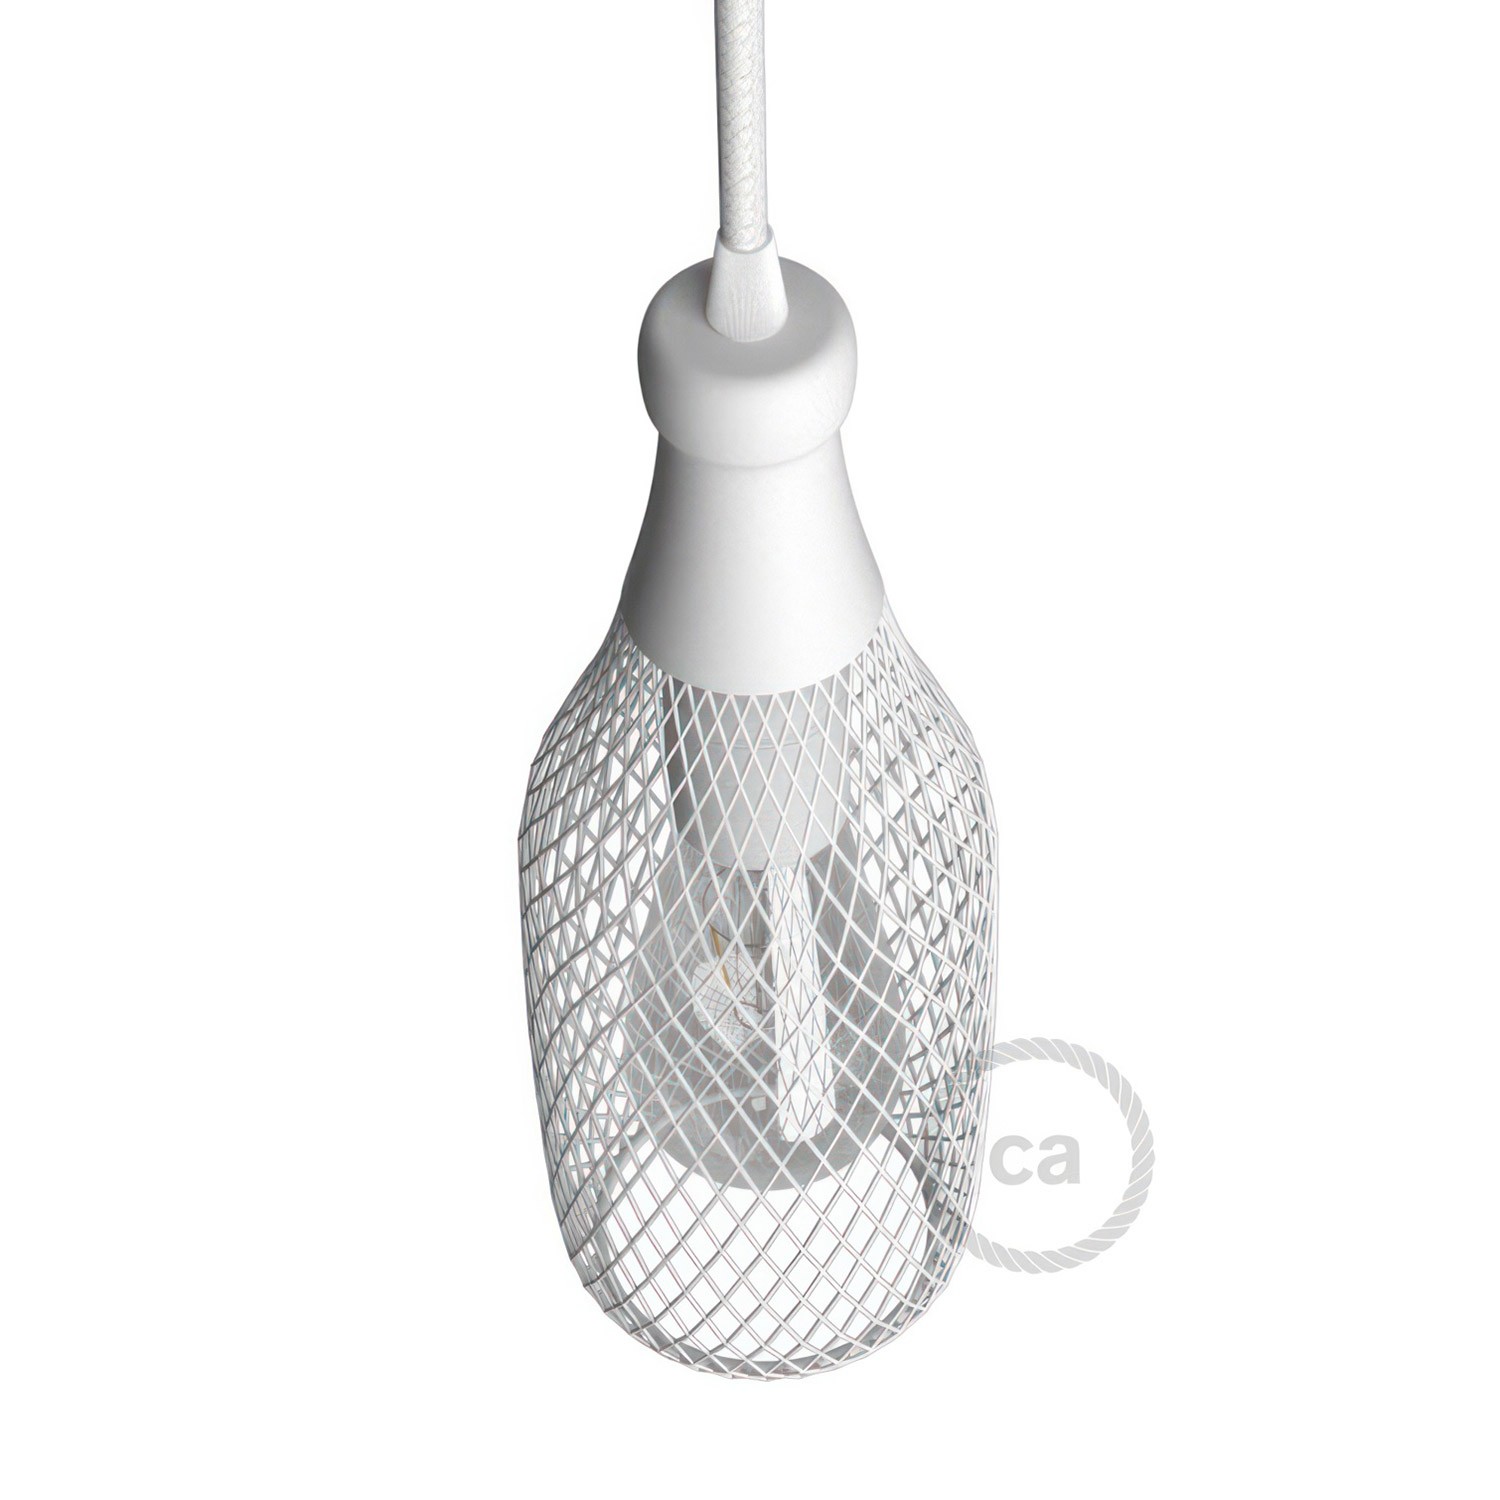 Bottle-shaped naked light bulb cage metal lampshade Magnum